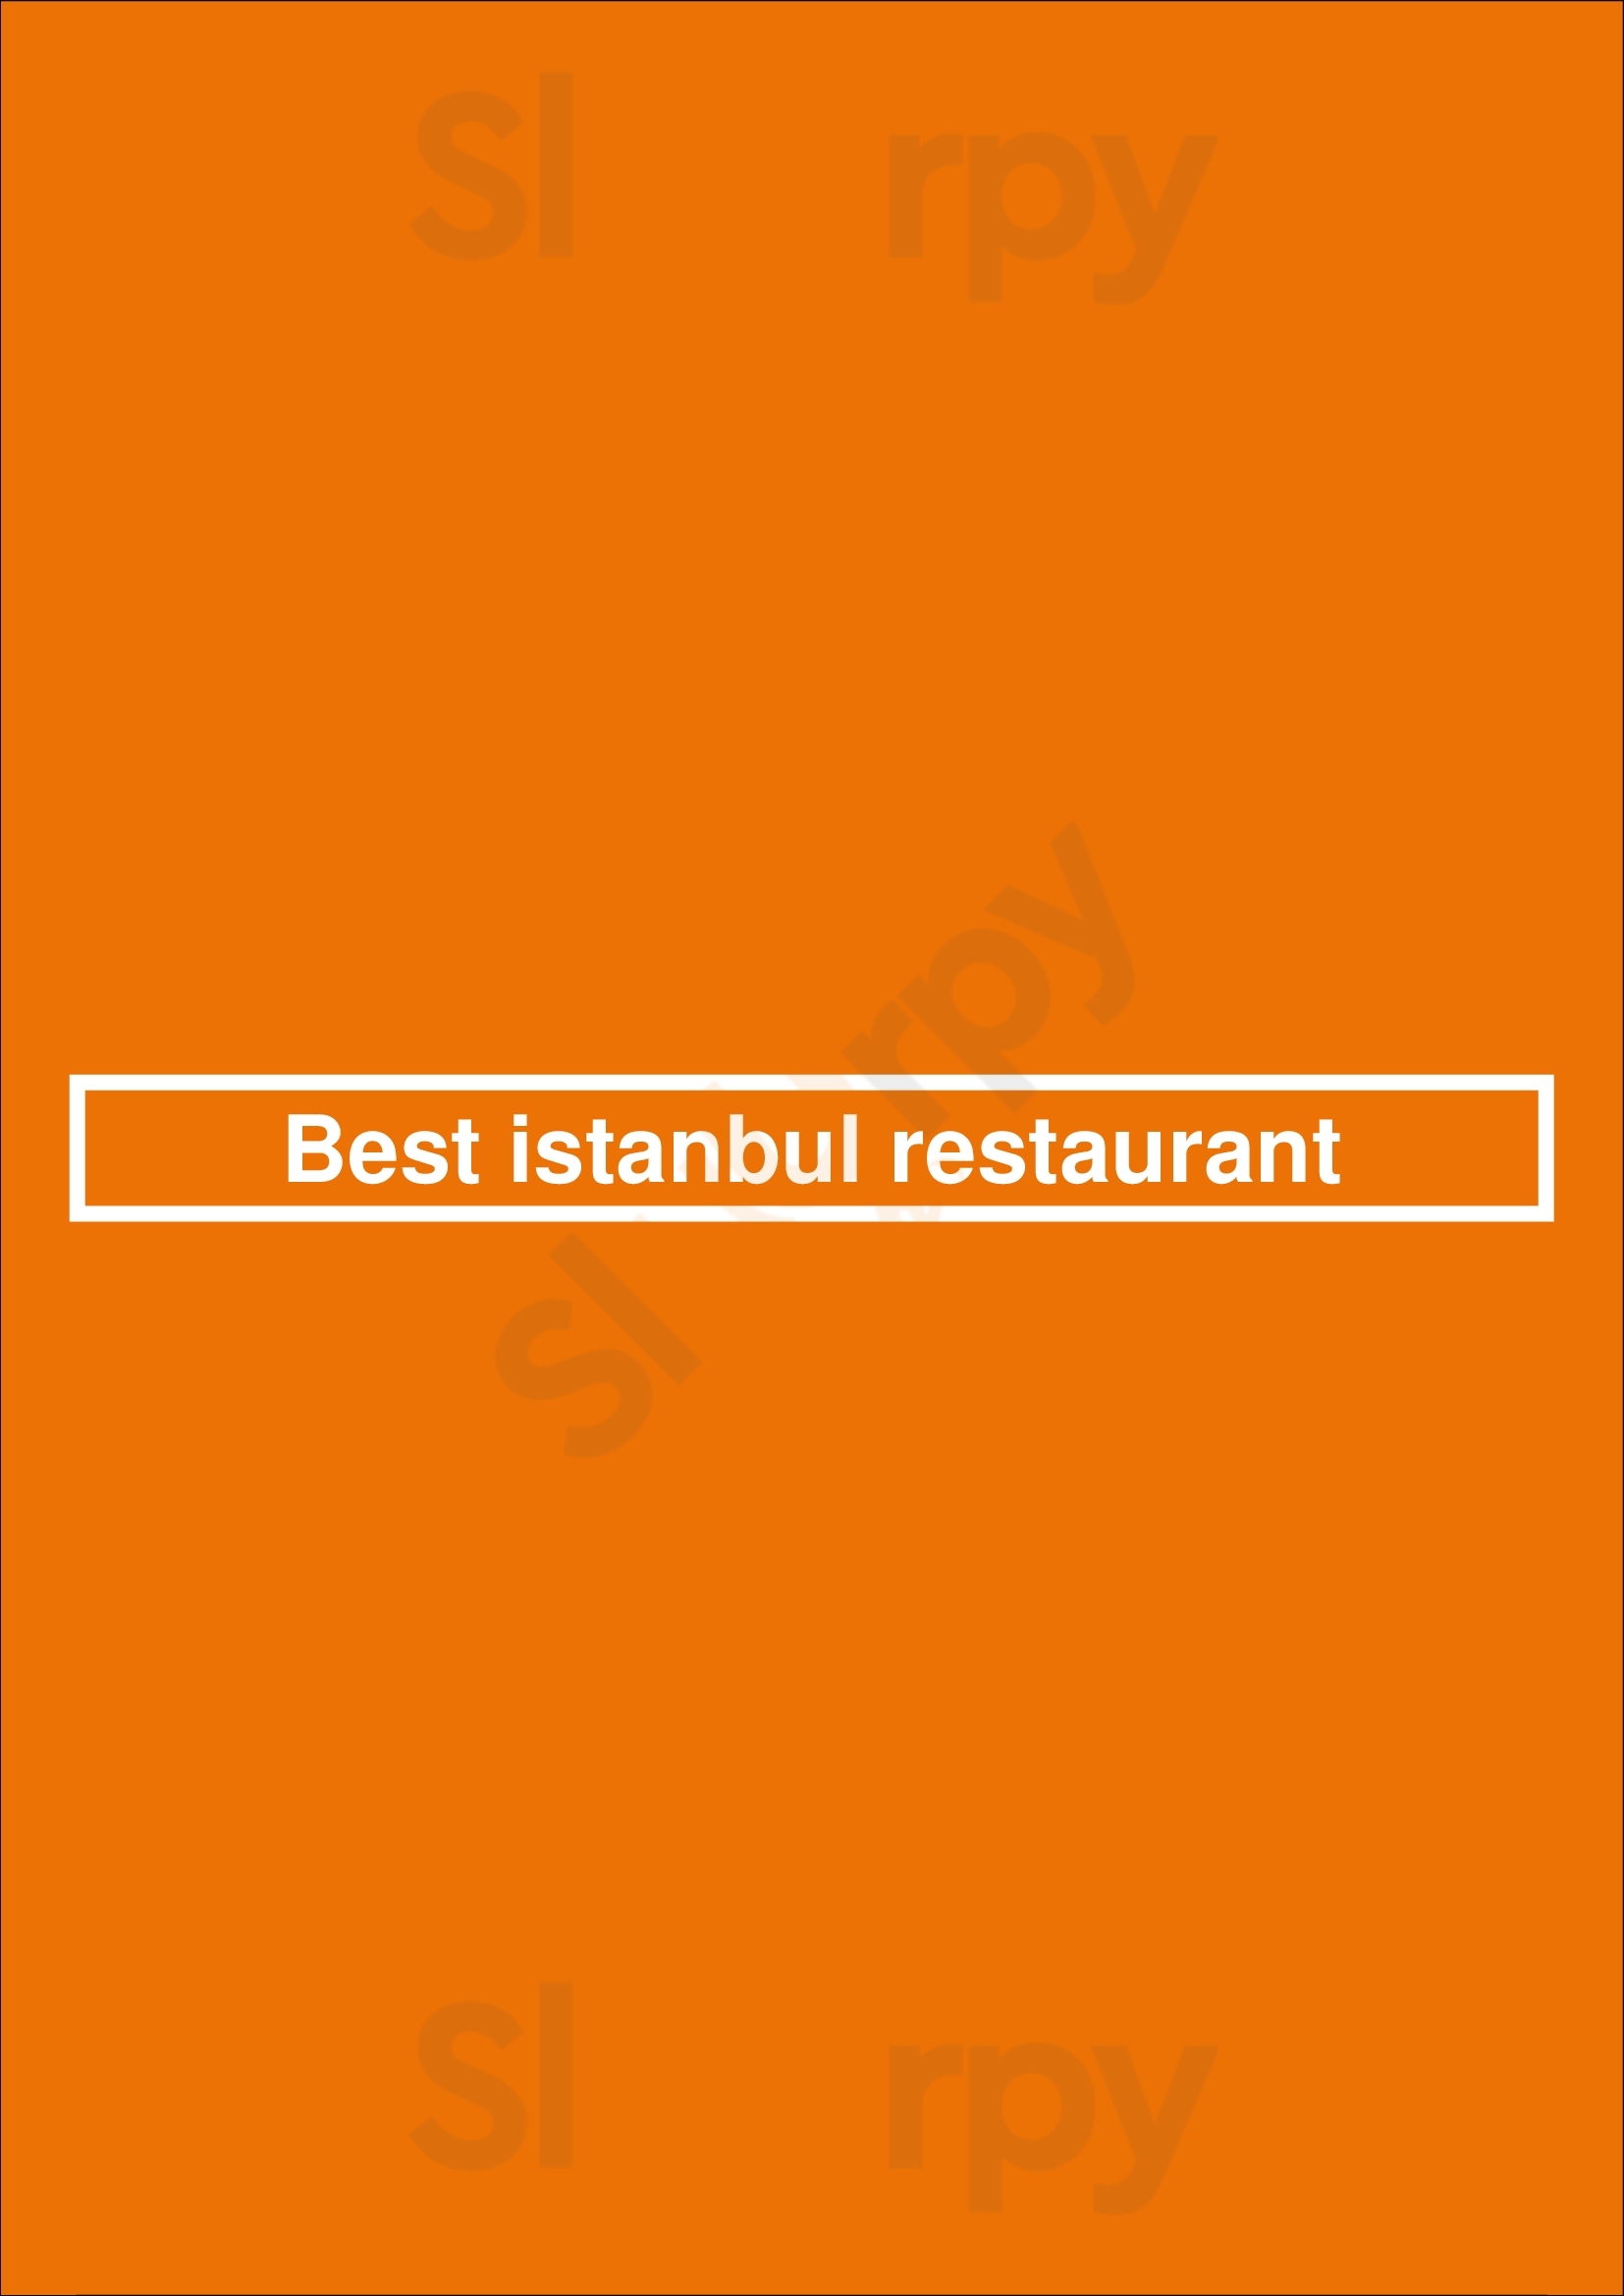 Best Istanbul Restaurant Toronto Menu - 1